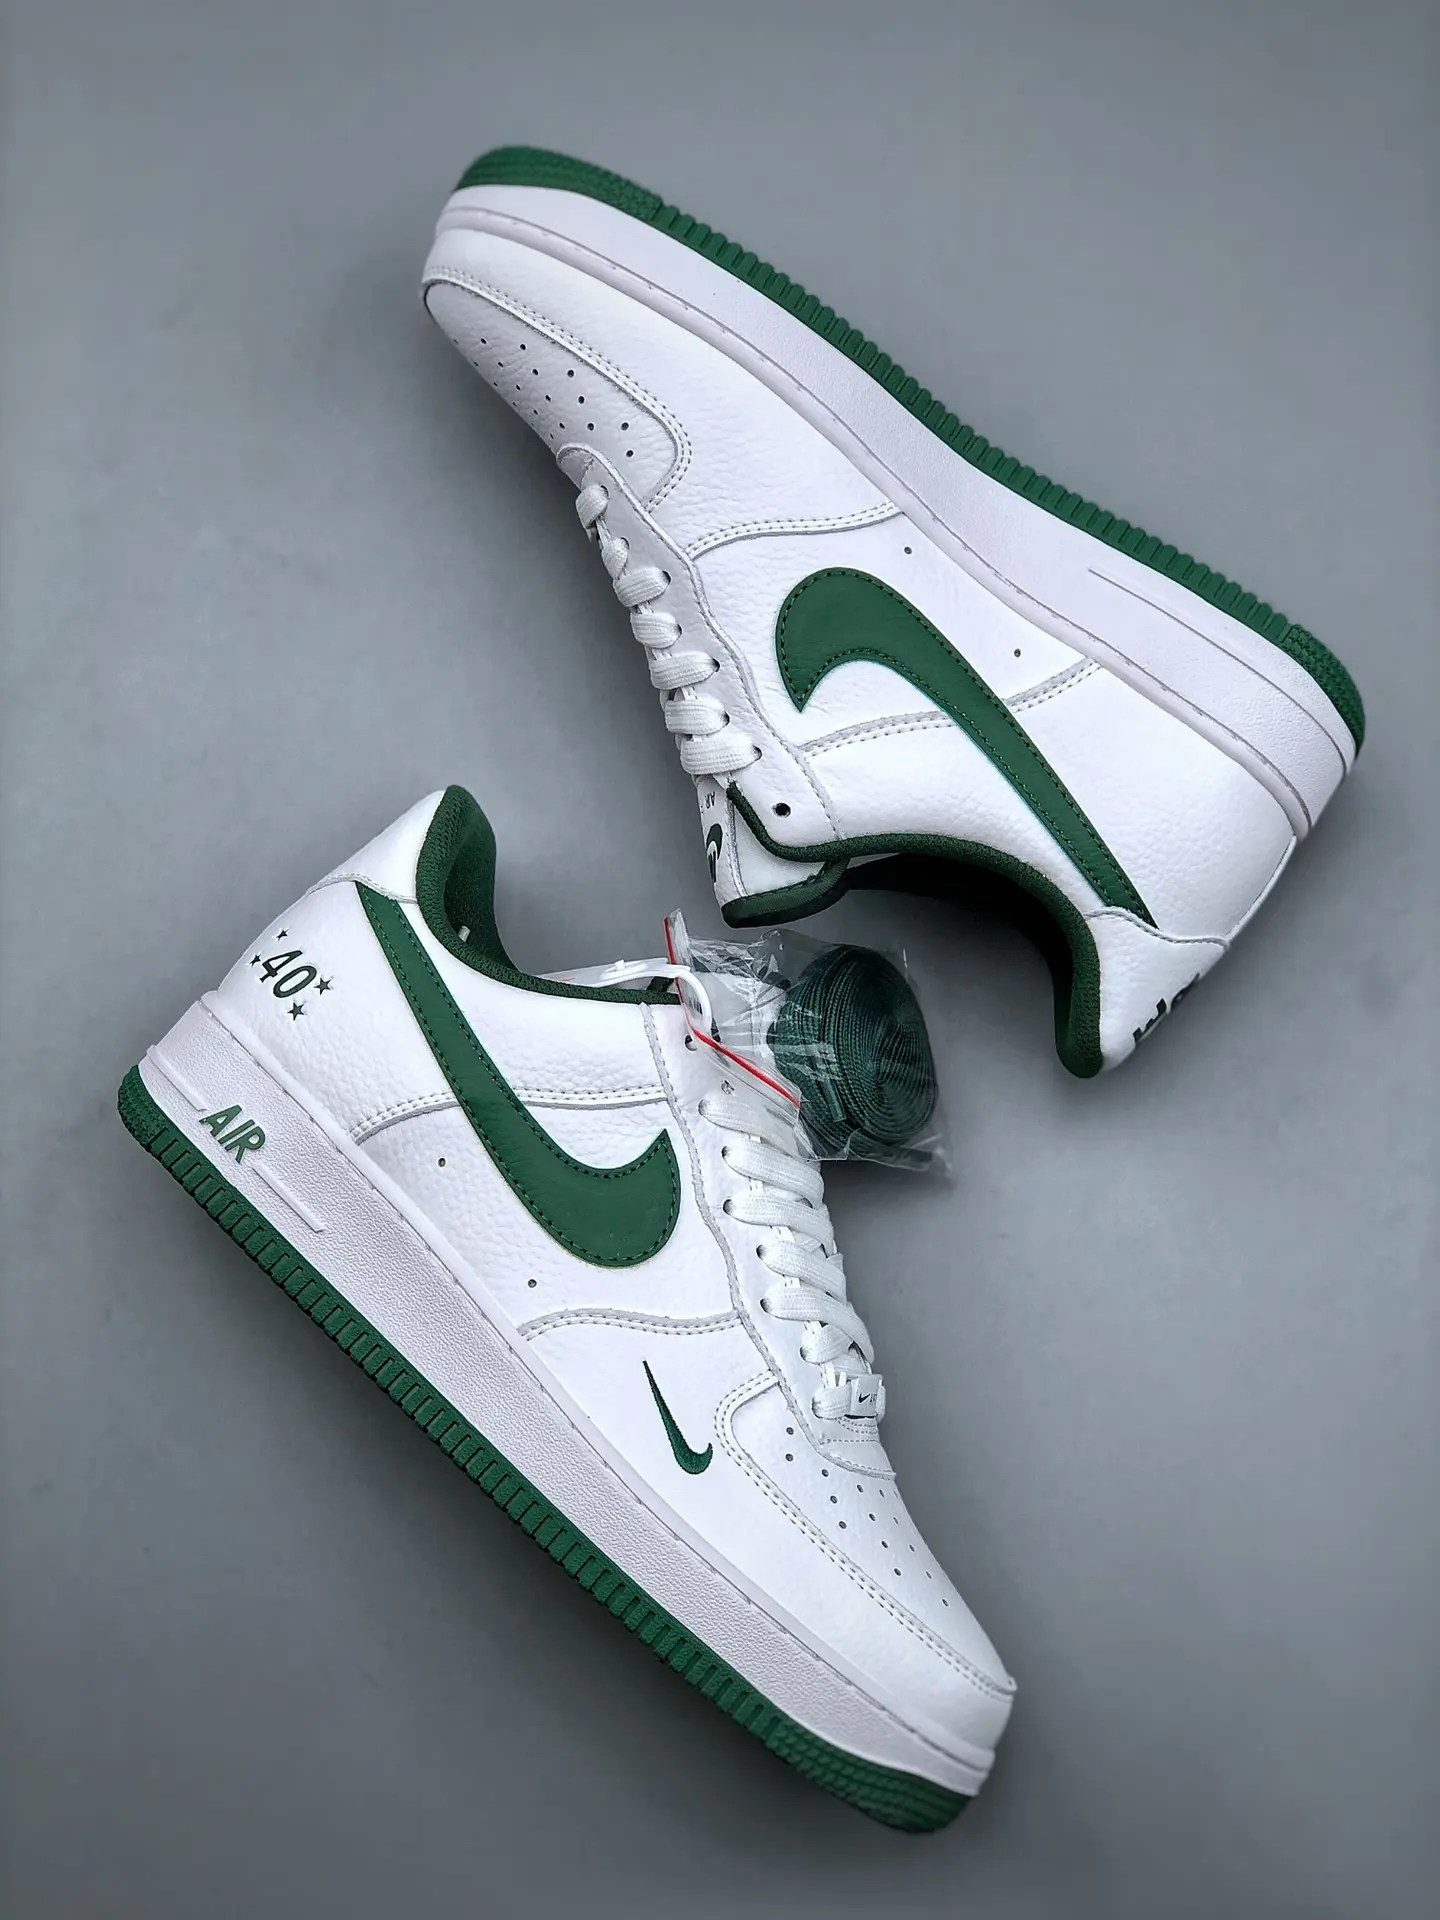 Nike Air Force 1 Low x LeBron James Four Horsemen White/Green Review | YtaYta